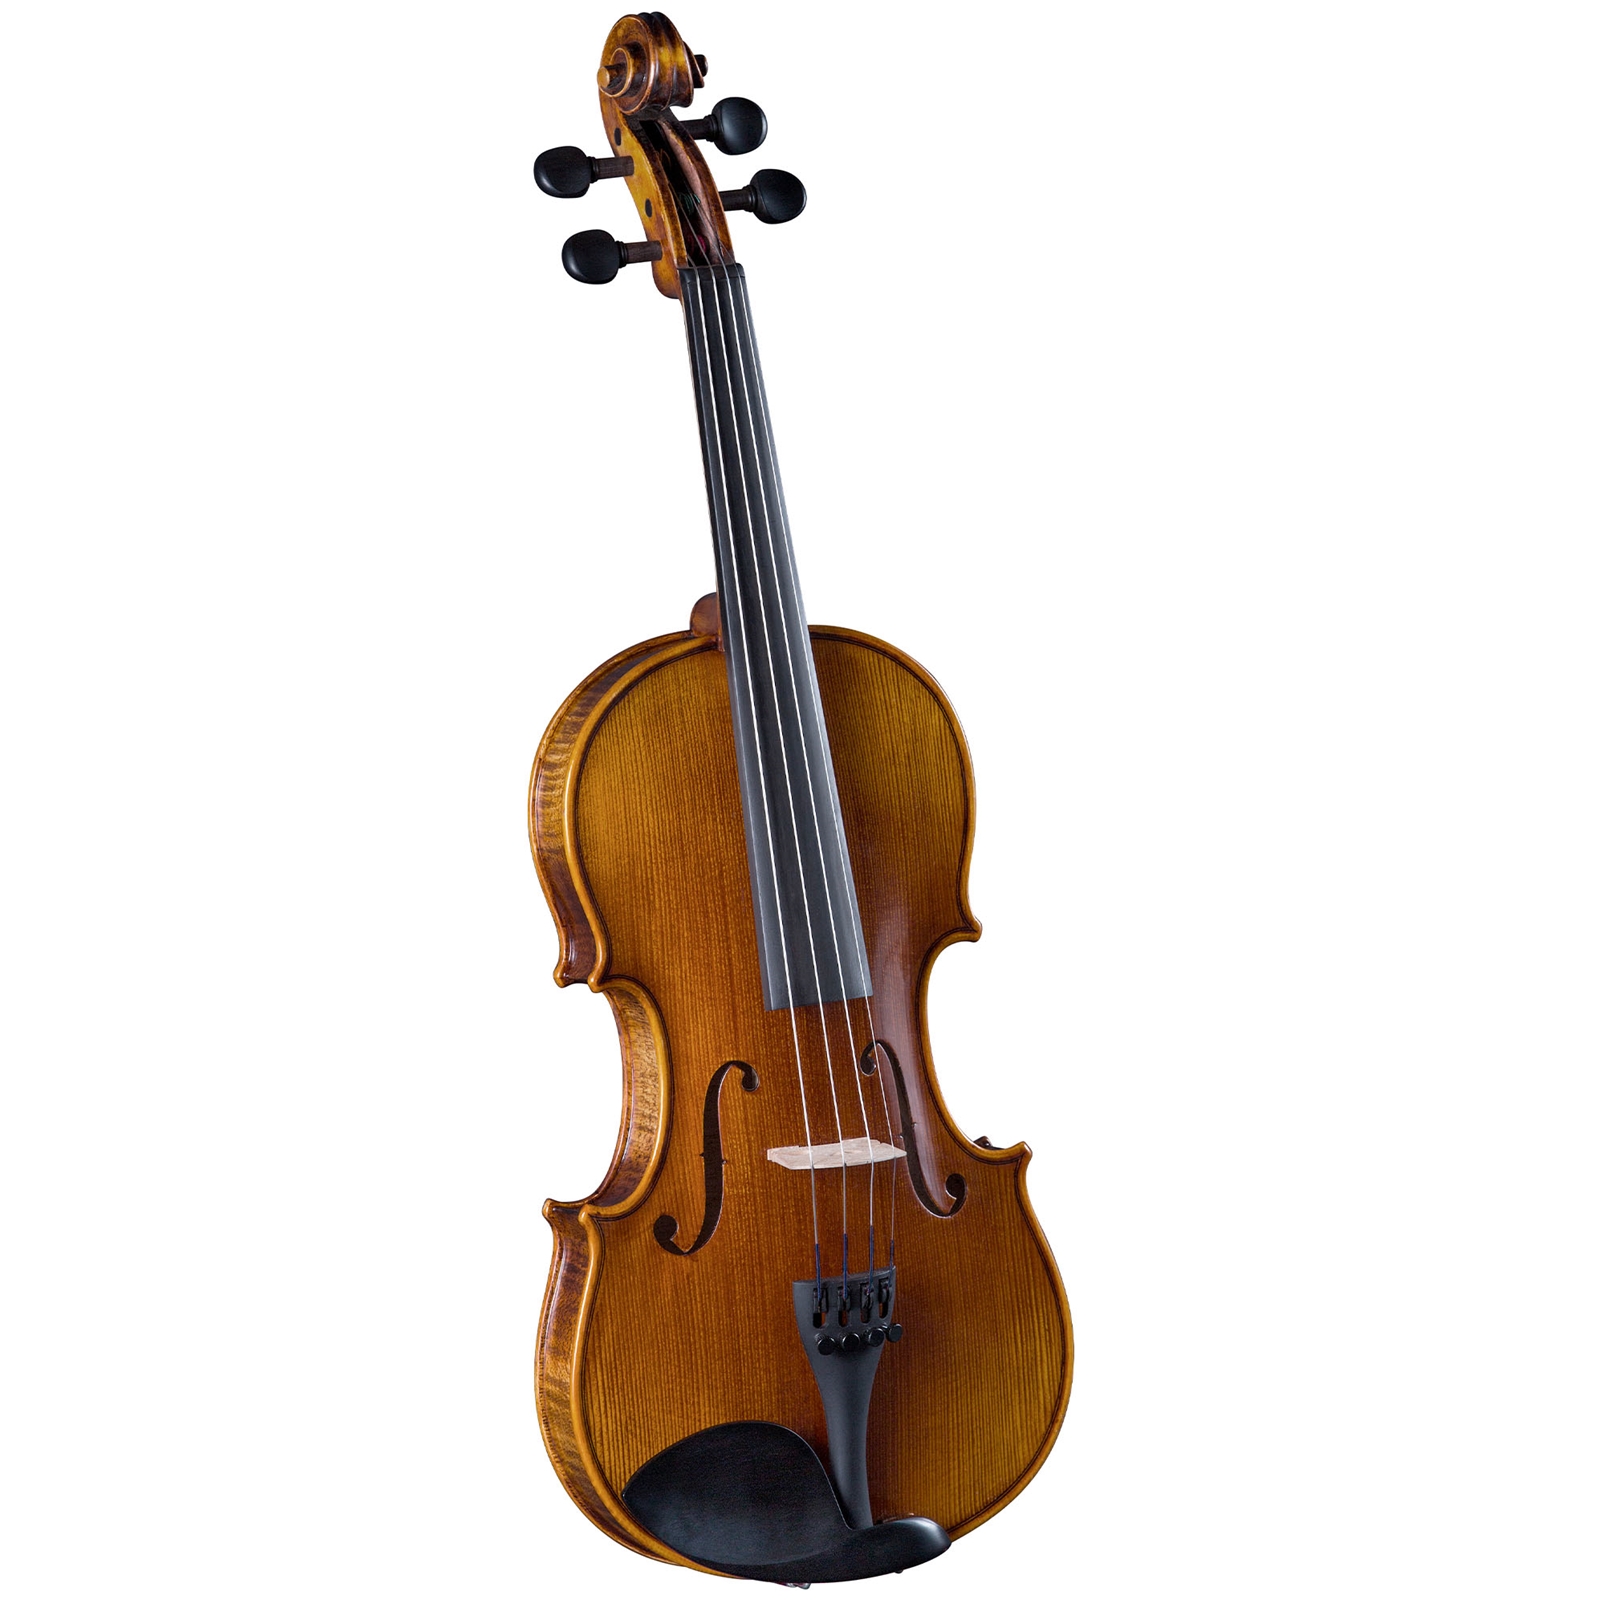 Cremona SV-500 Premier Artist Violin Outfit